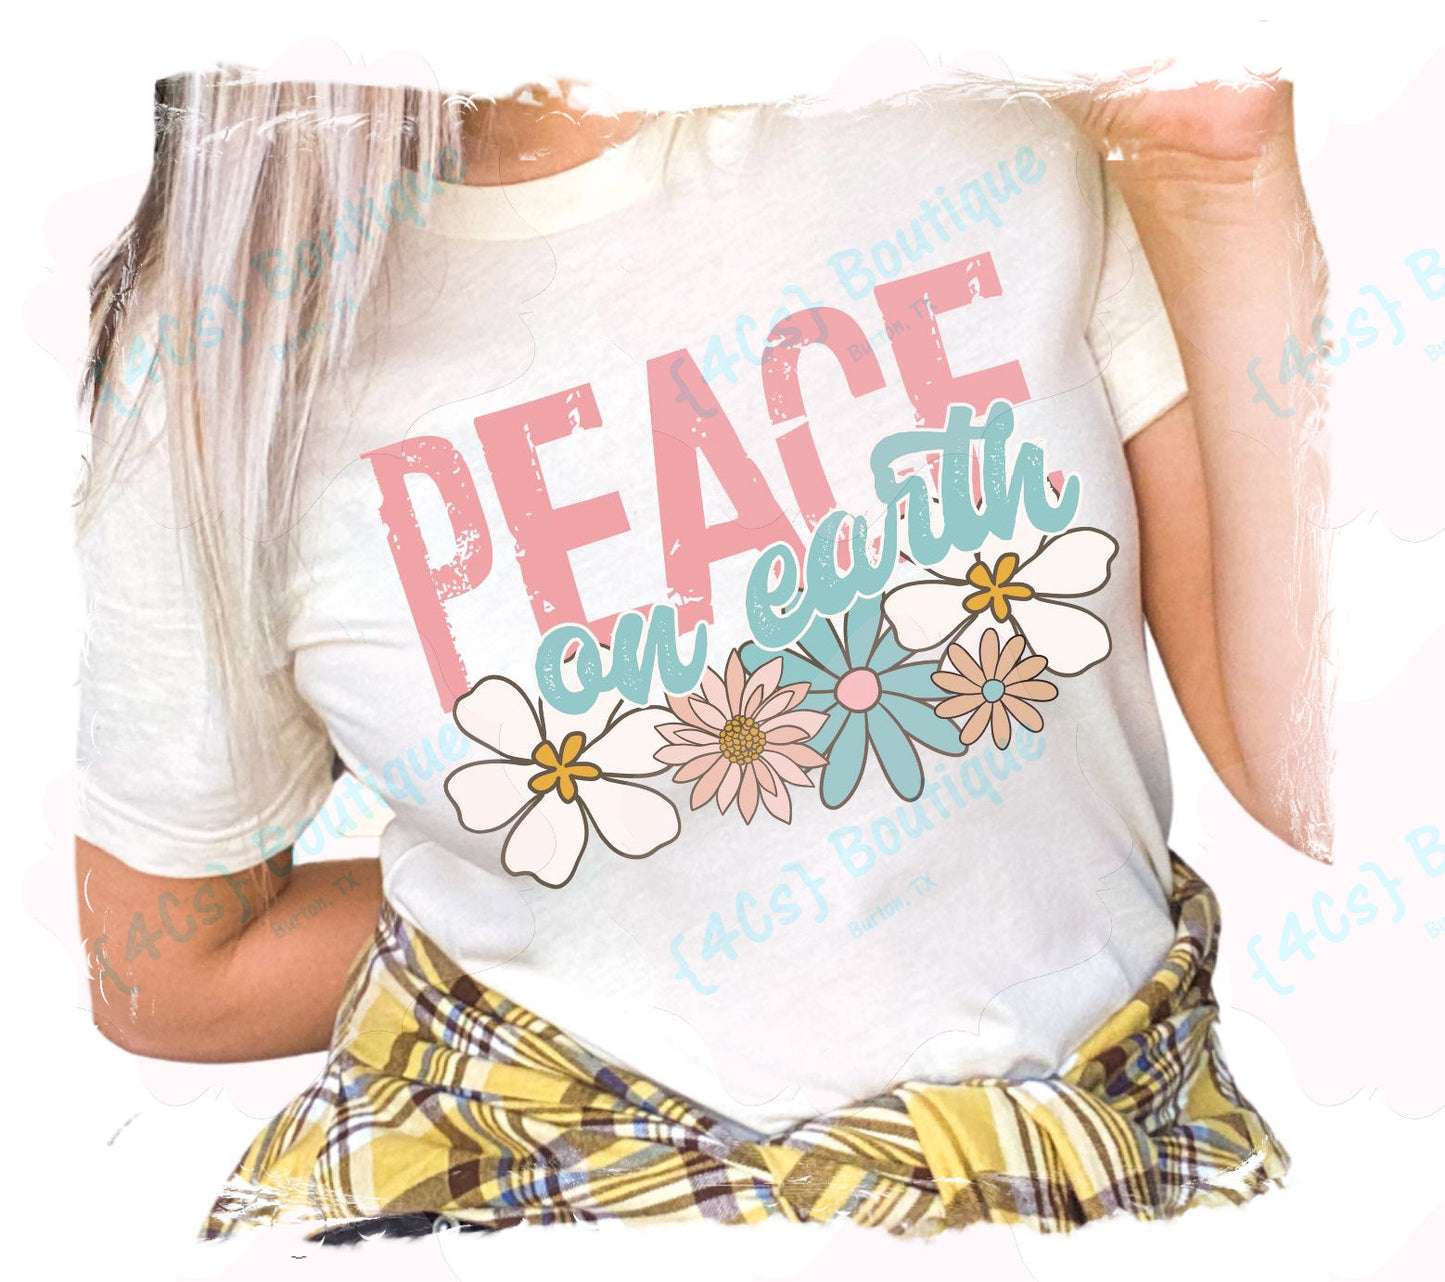 Peace On Earth Shirt